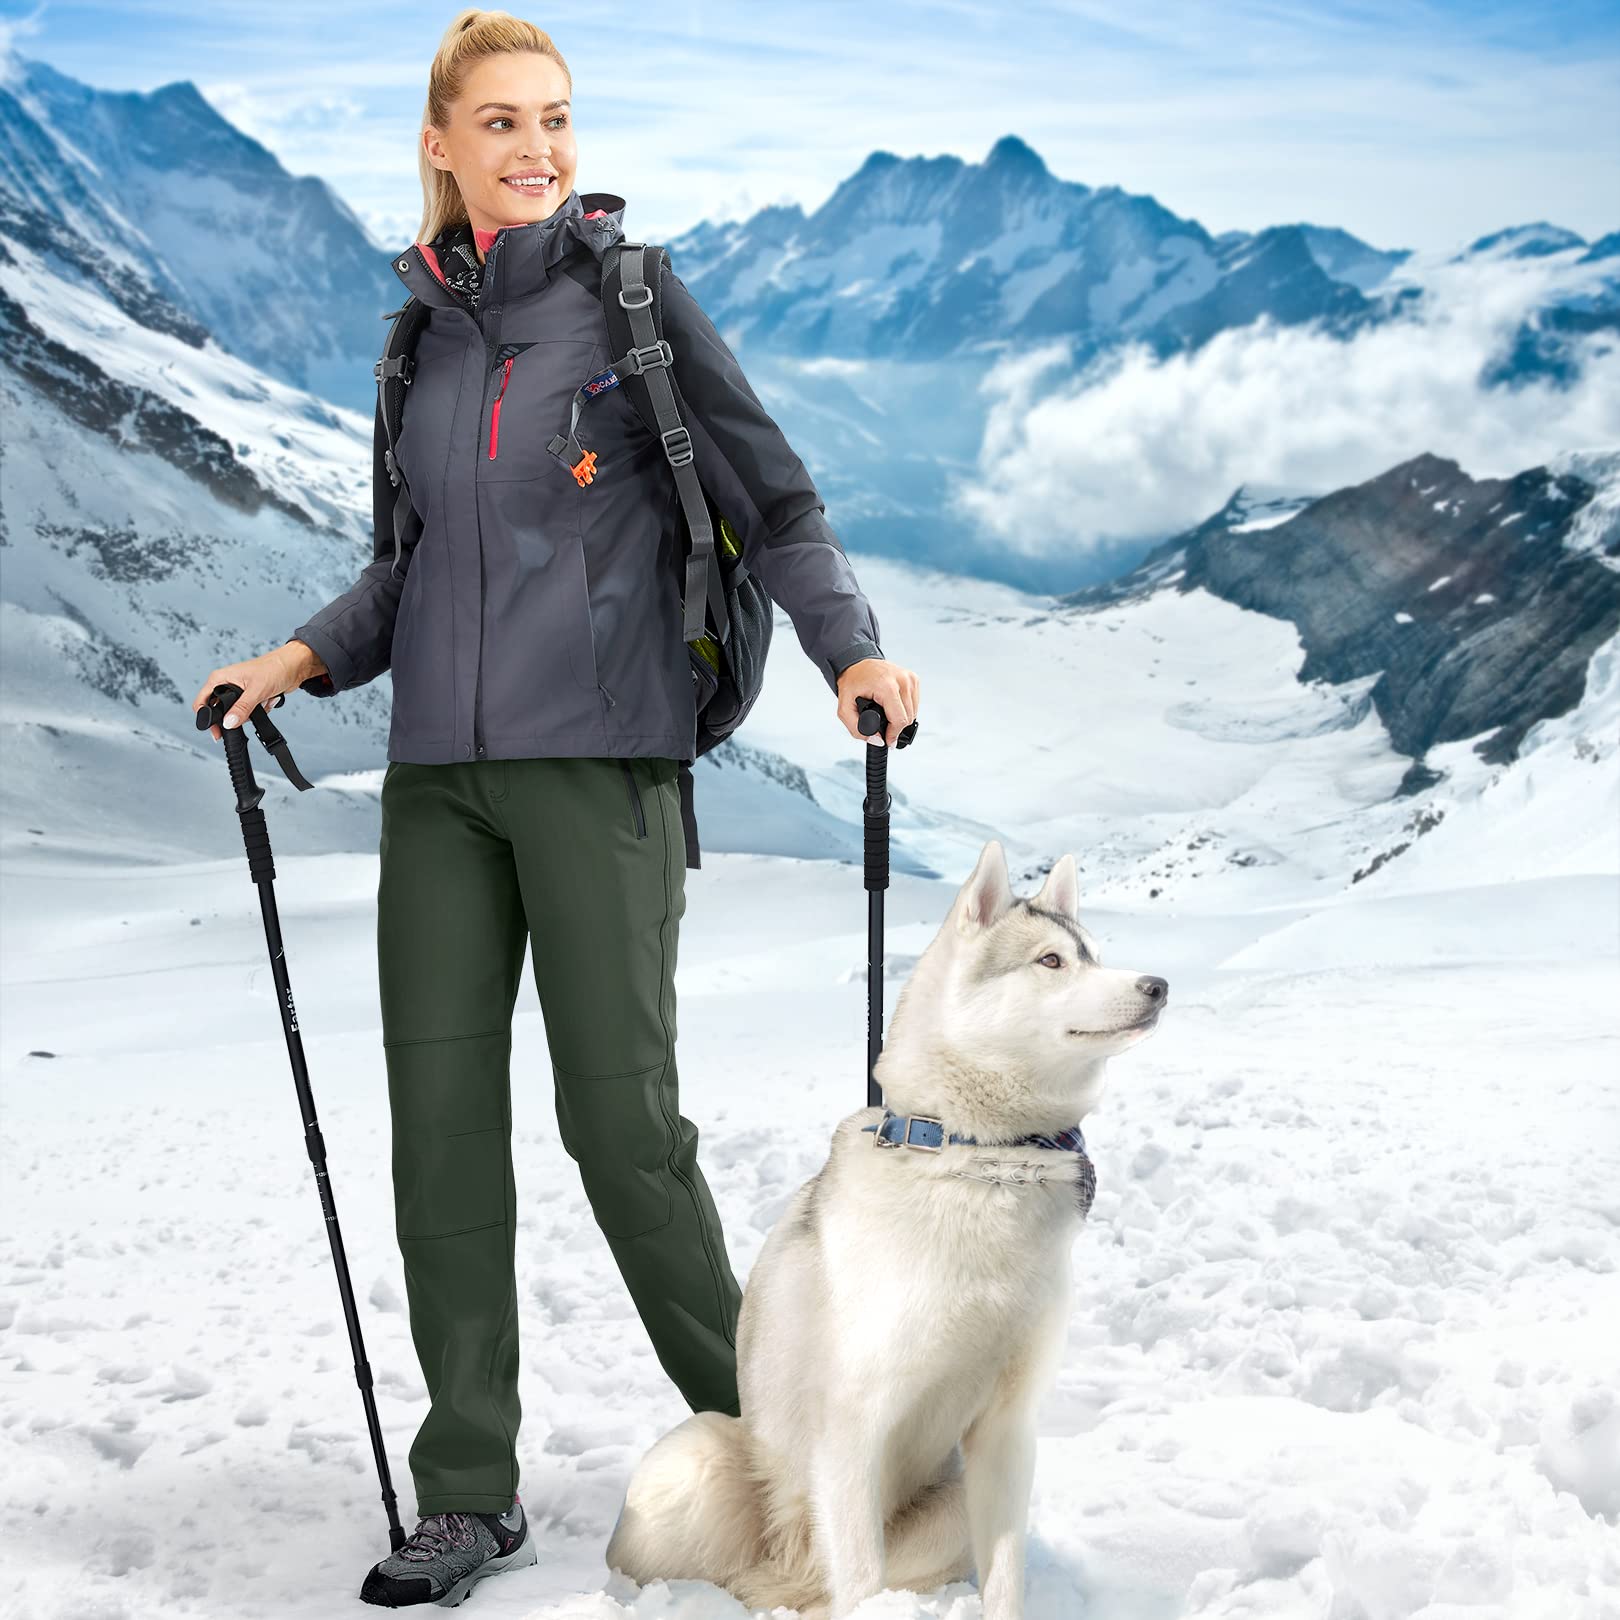 Women's Snow pants Hiking ski Waterproof Fleece Lined Outdoor Cargo Pants Softshell Winter Warm Pants with Zipper Pockets,209,Army,10